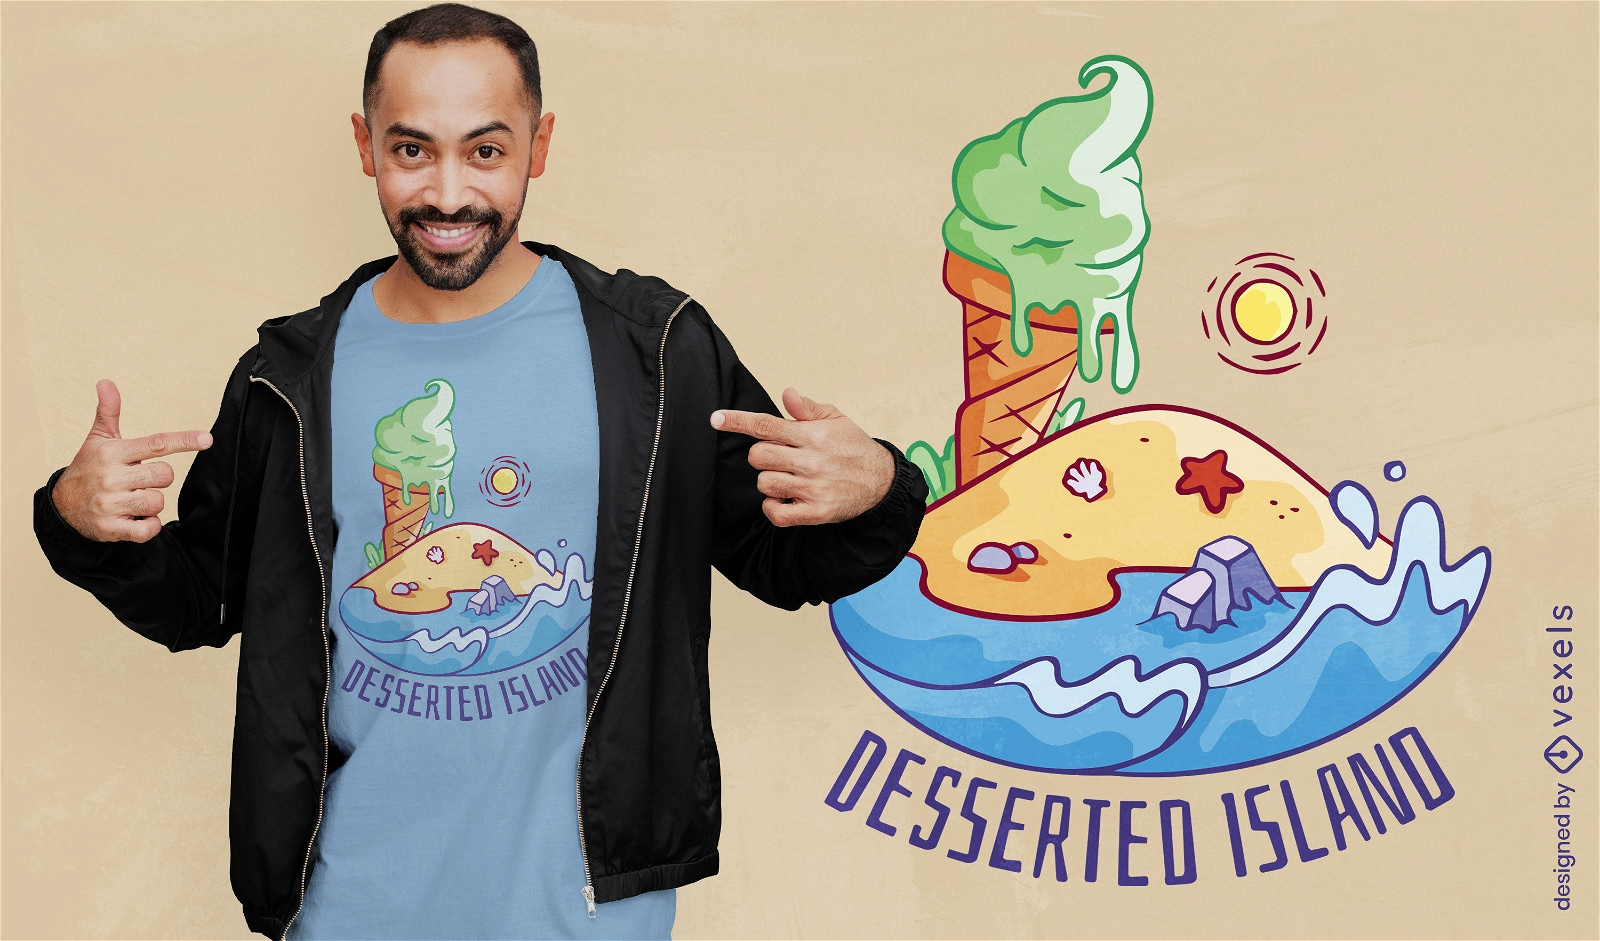 Ice cream island sweet t-shirt design